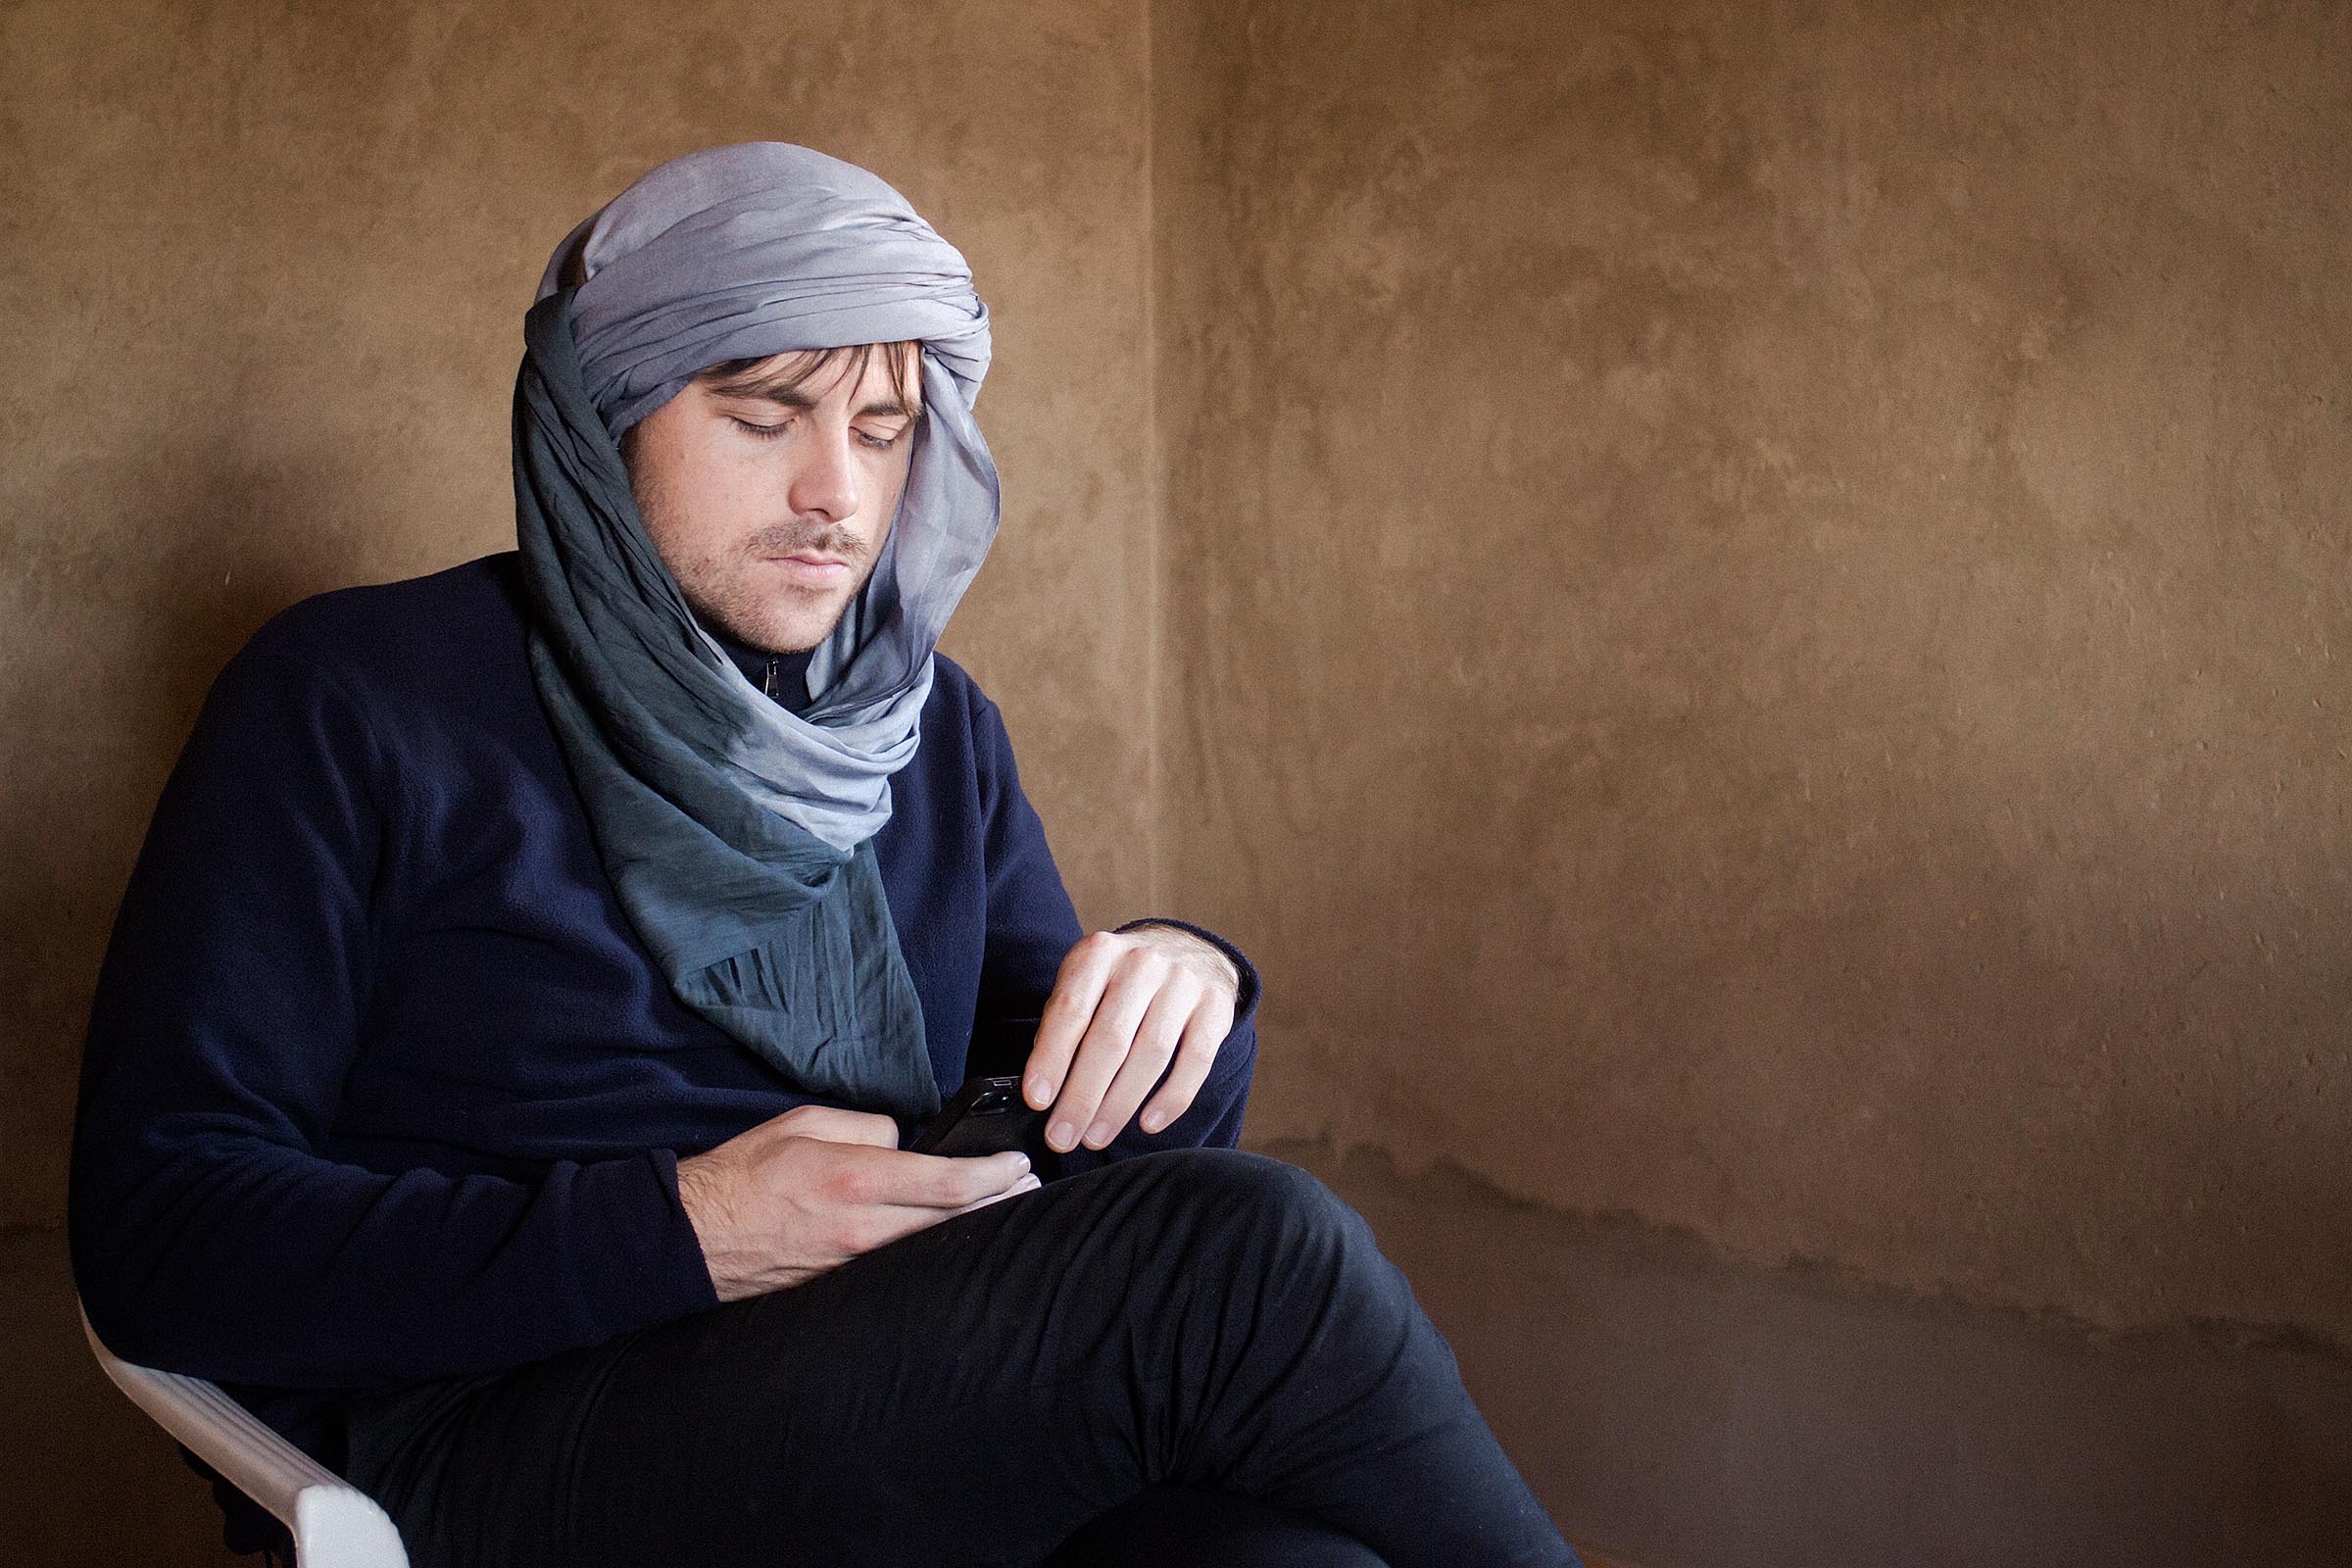 “Headscarf is essential for Sahara”